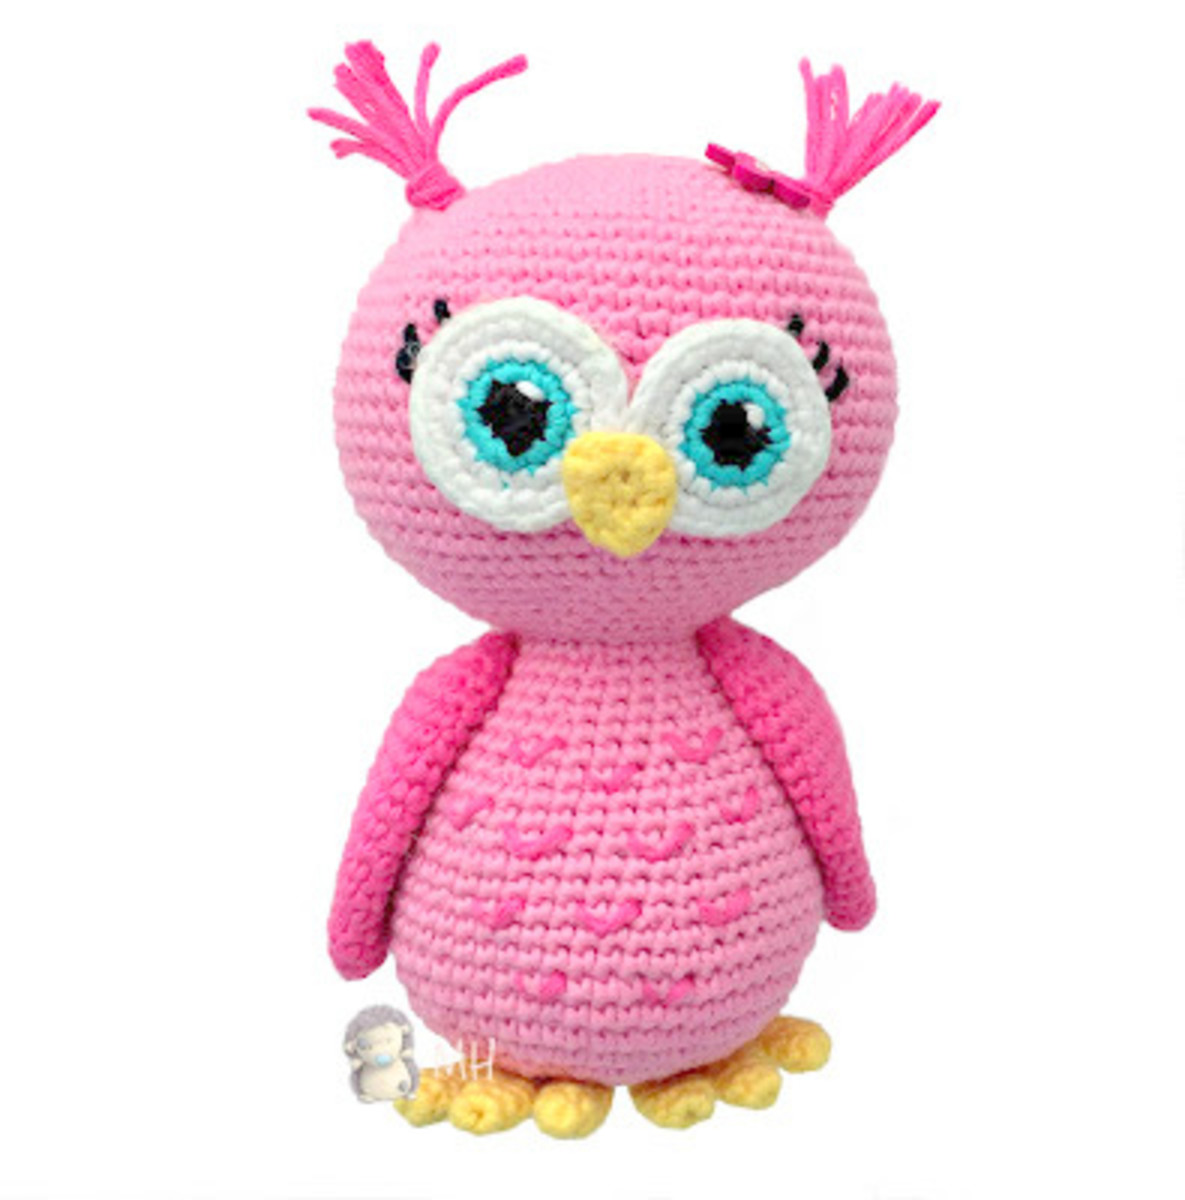 free-crochet-pattern-pink-owl-amigurumi-doll-hubpages